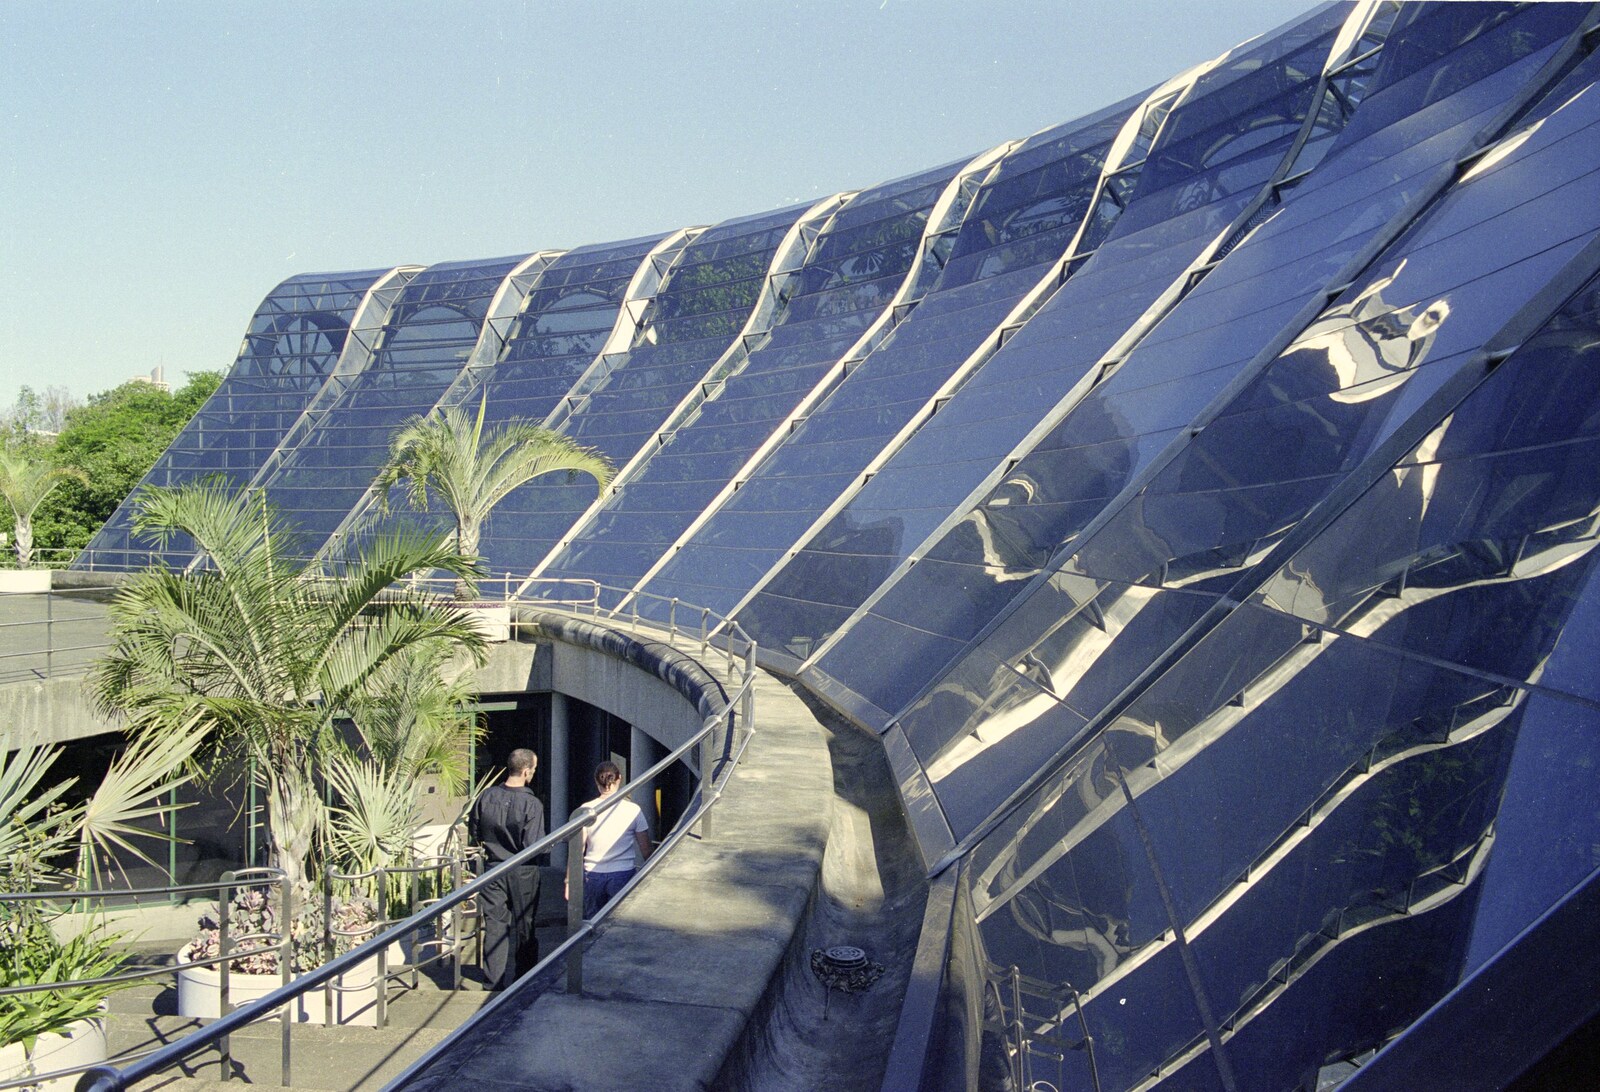 Funky greenhouses at the Botanical Gardens from Sydney Triathlon, Sydney, Australia - 16th April 2000